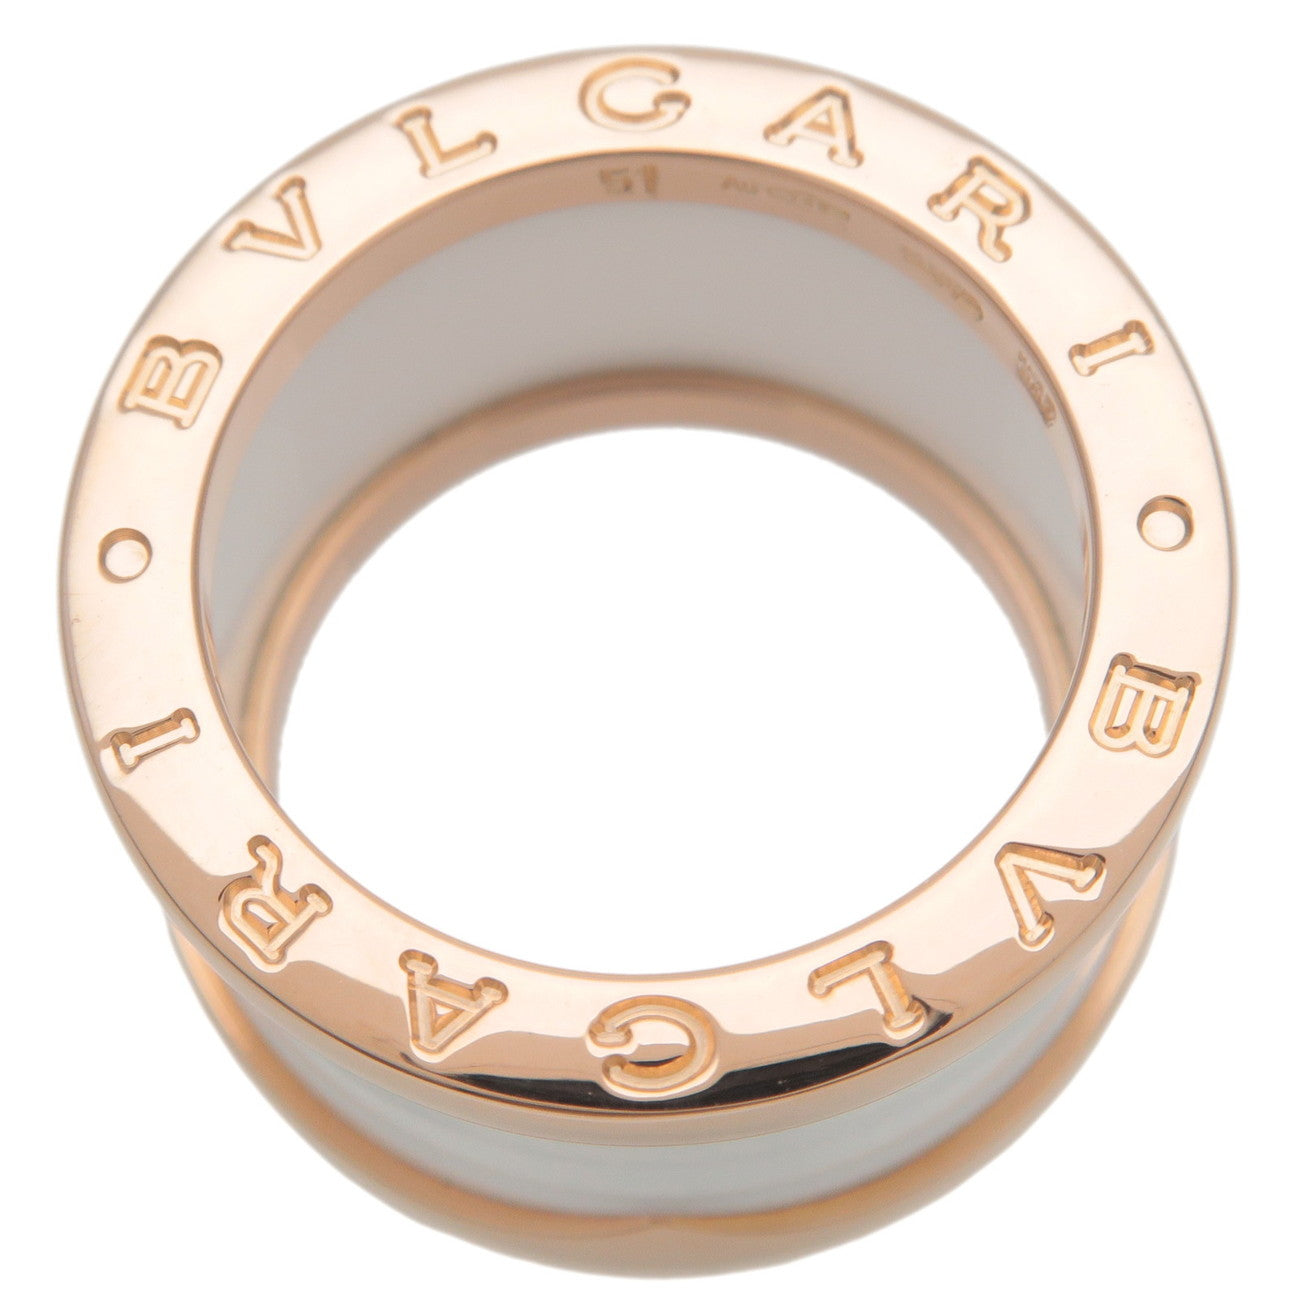 BVLGARI B-Zero1 Ring 4 Band K18 Rose Gold White Ceramic #51 US5.5